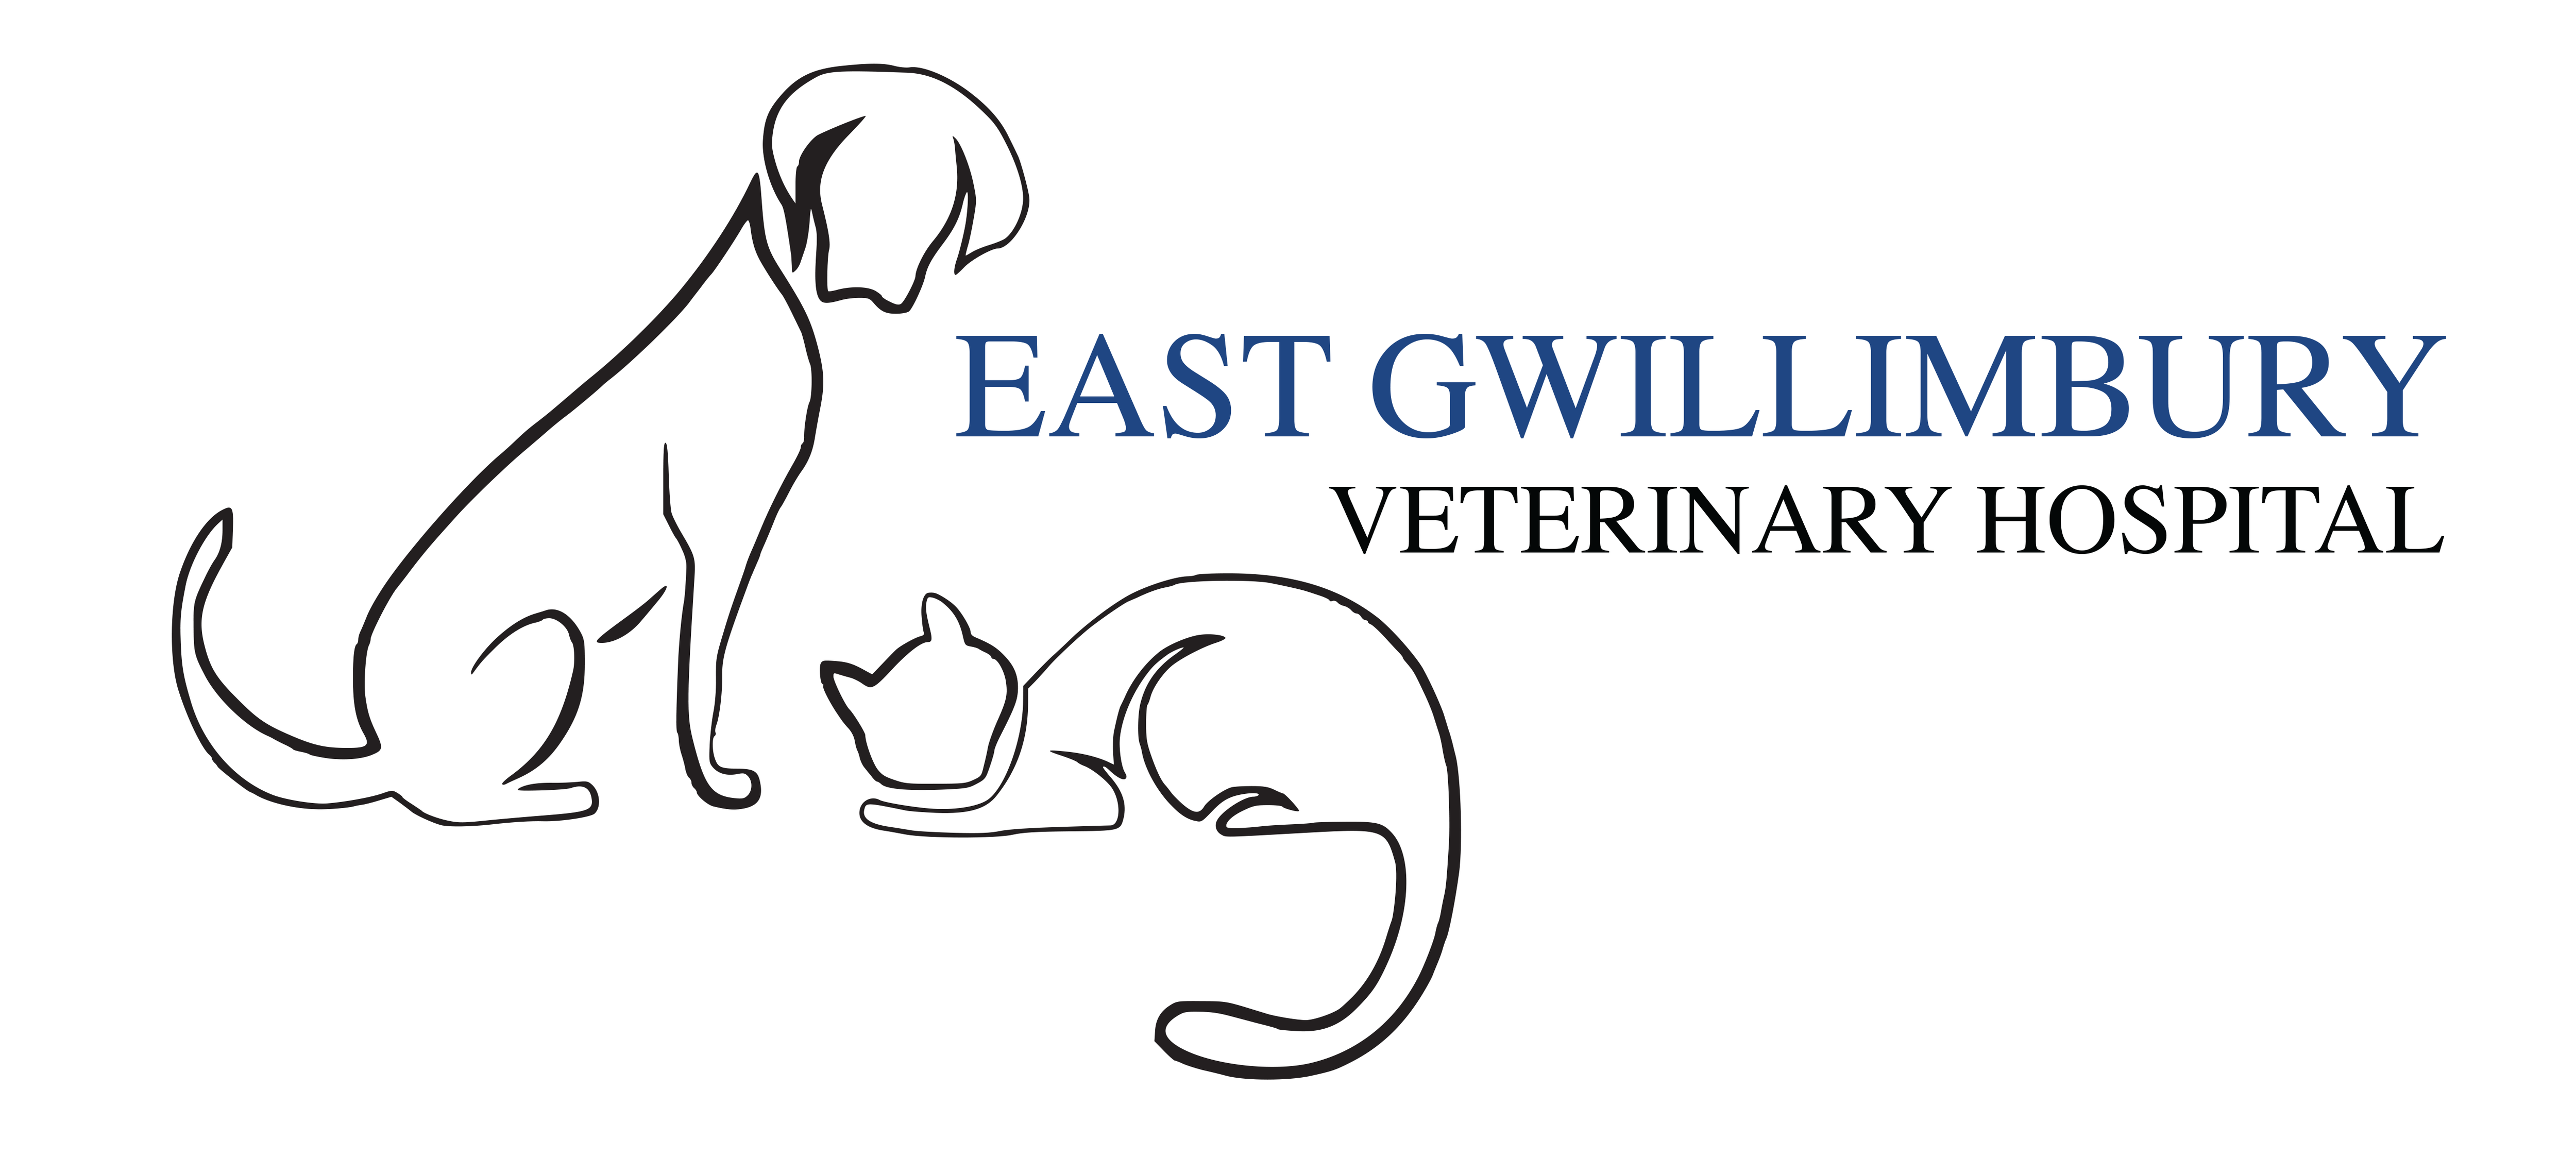 East Gwillimbury Veterinary Hospital